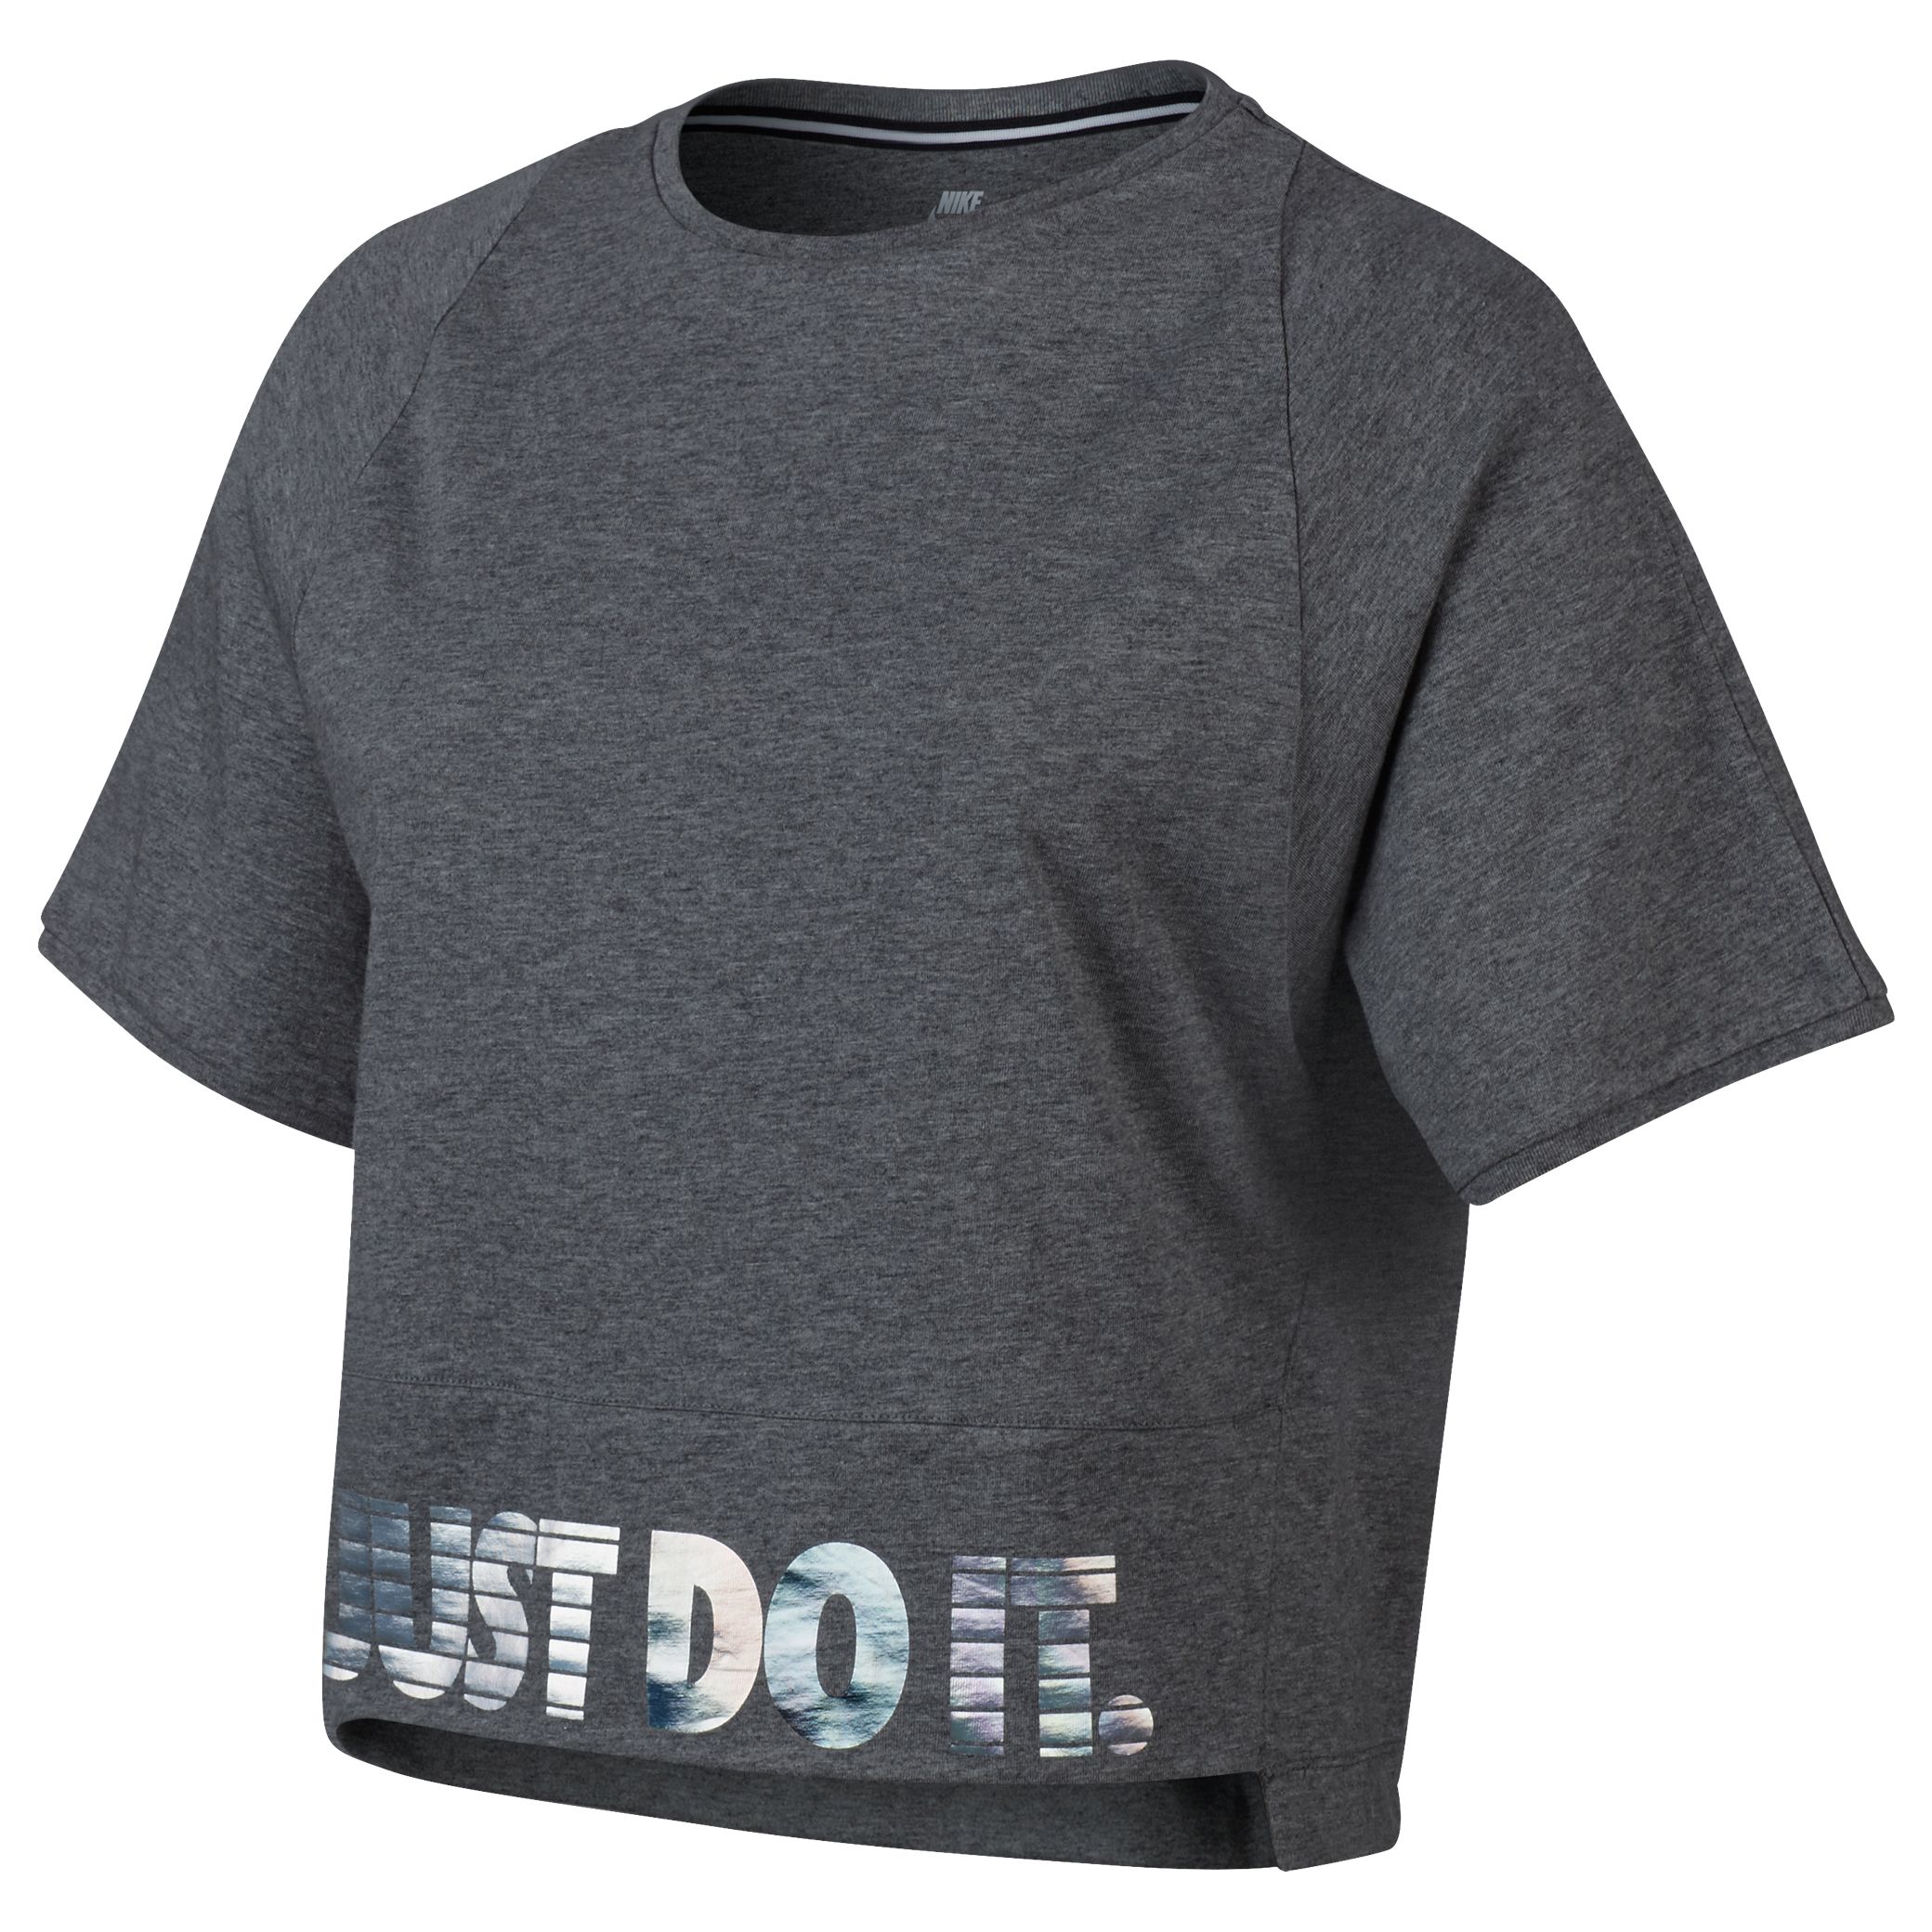 Nike Holographic Logo Crop Top, Grey